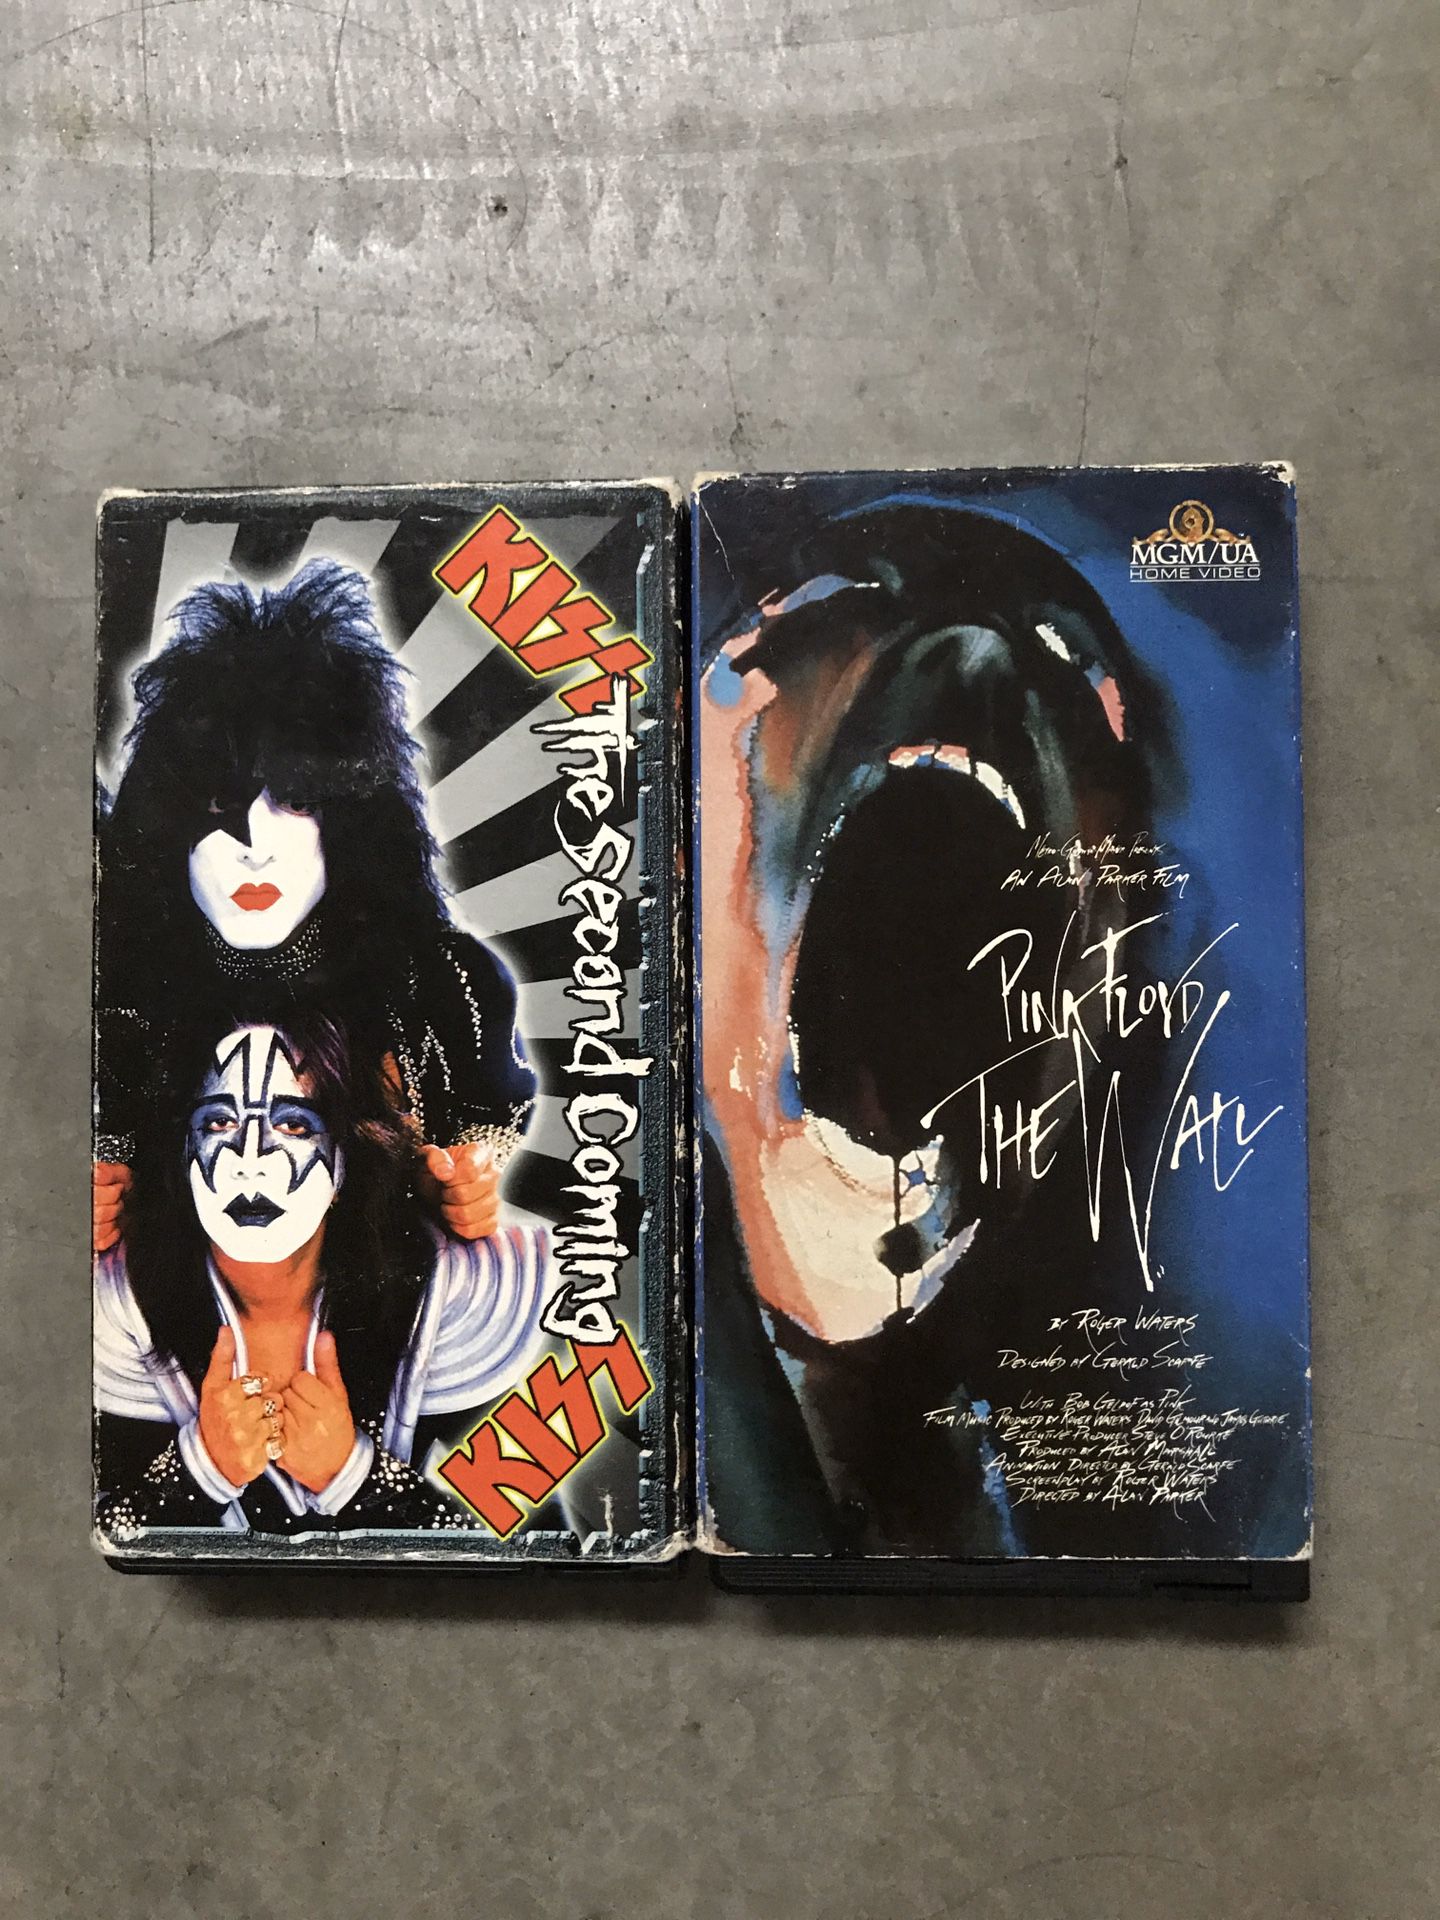 ROCK VHS TOUR MOVIES - KISS PINK FLOYD